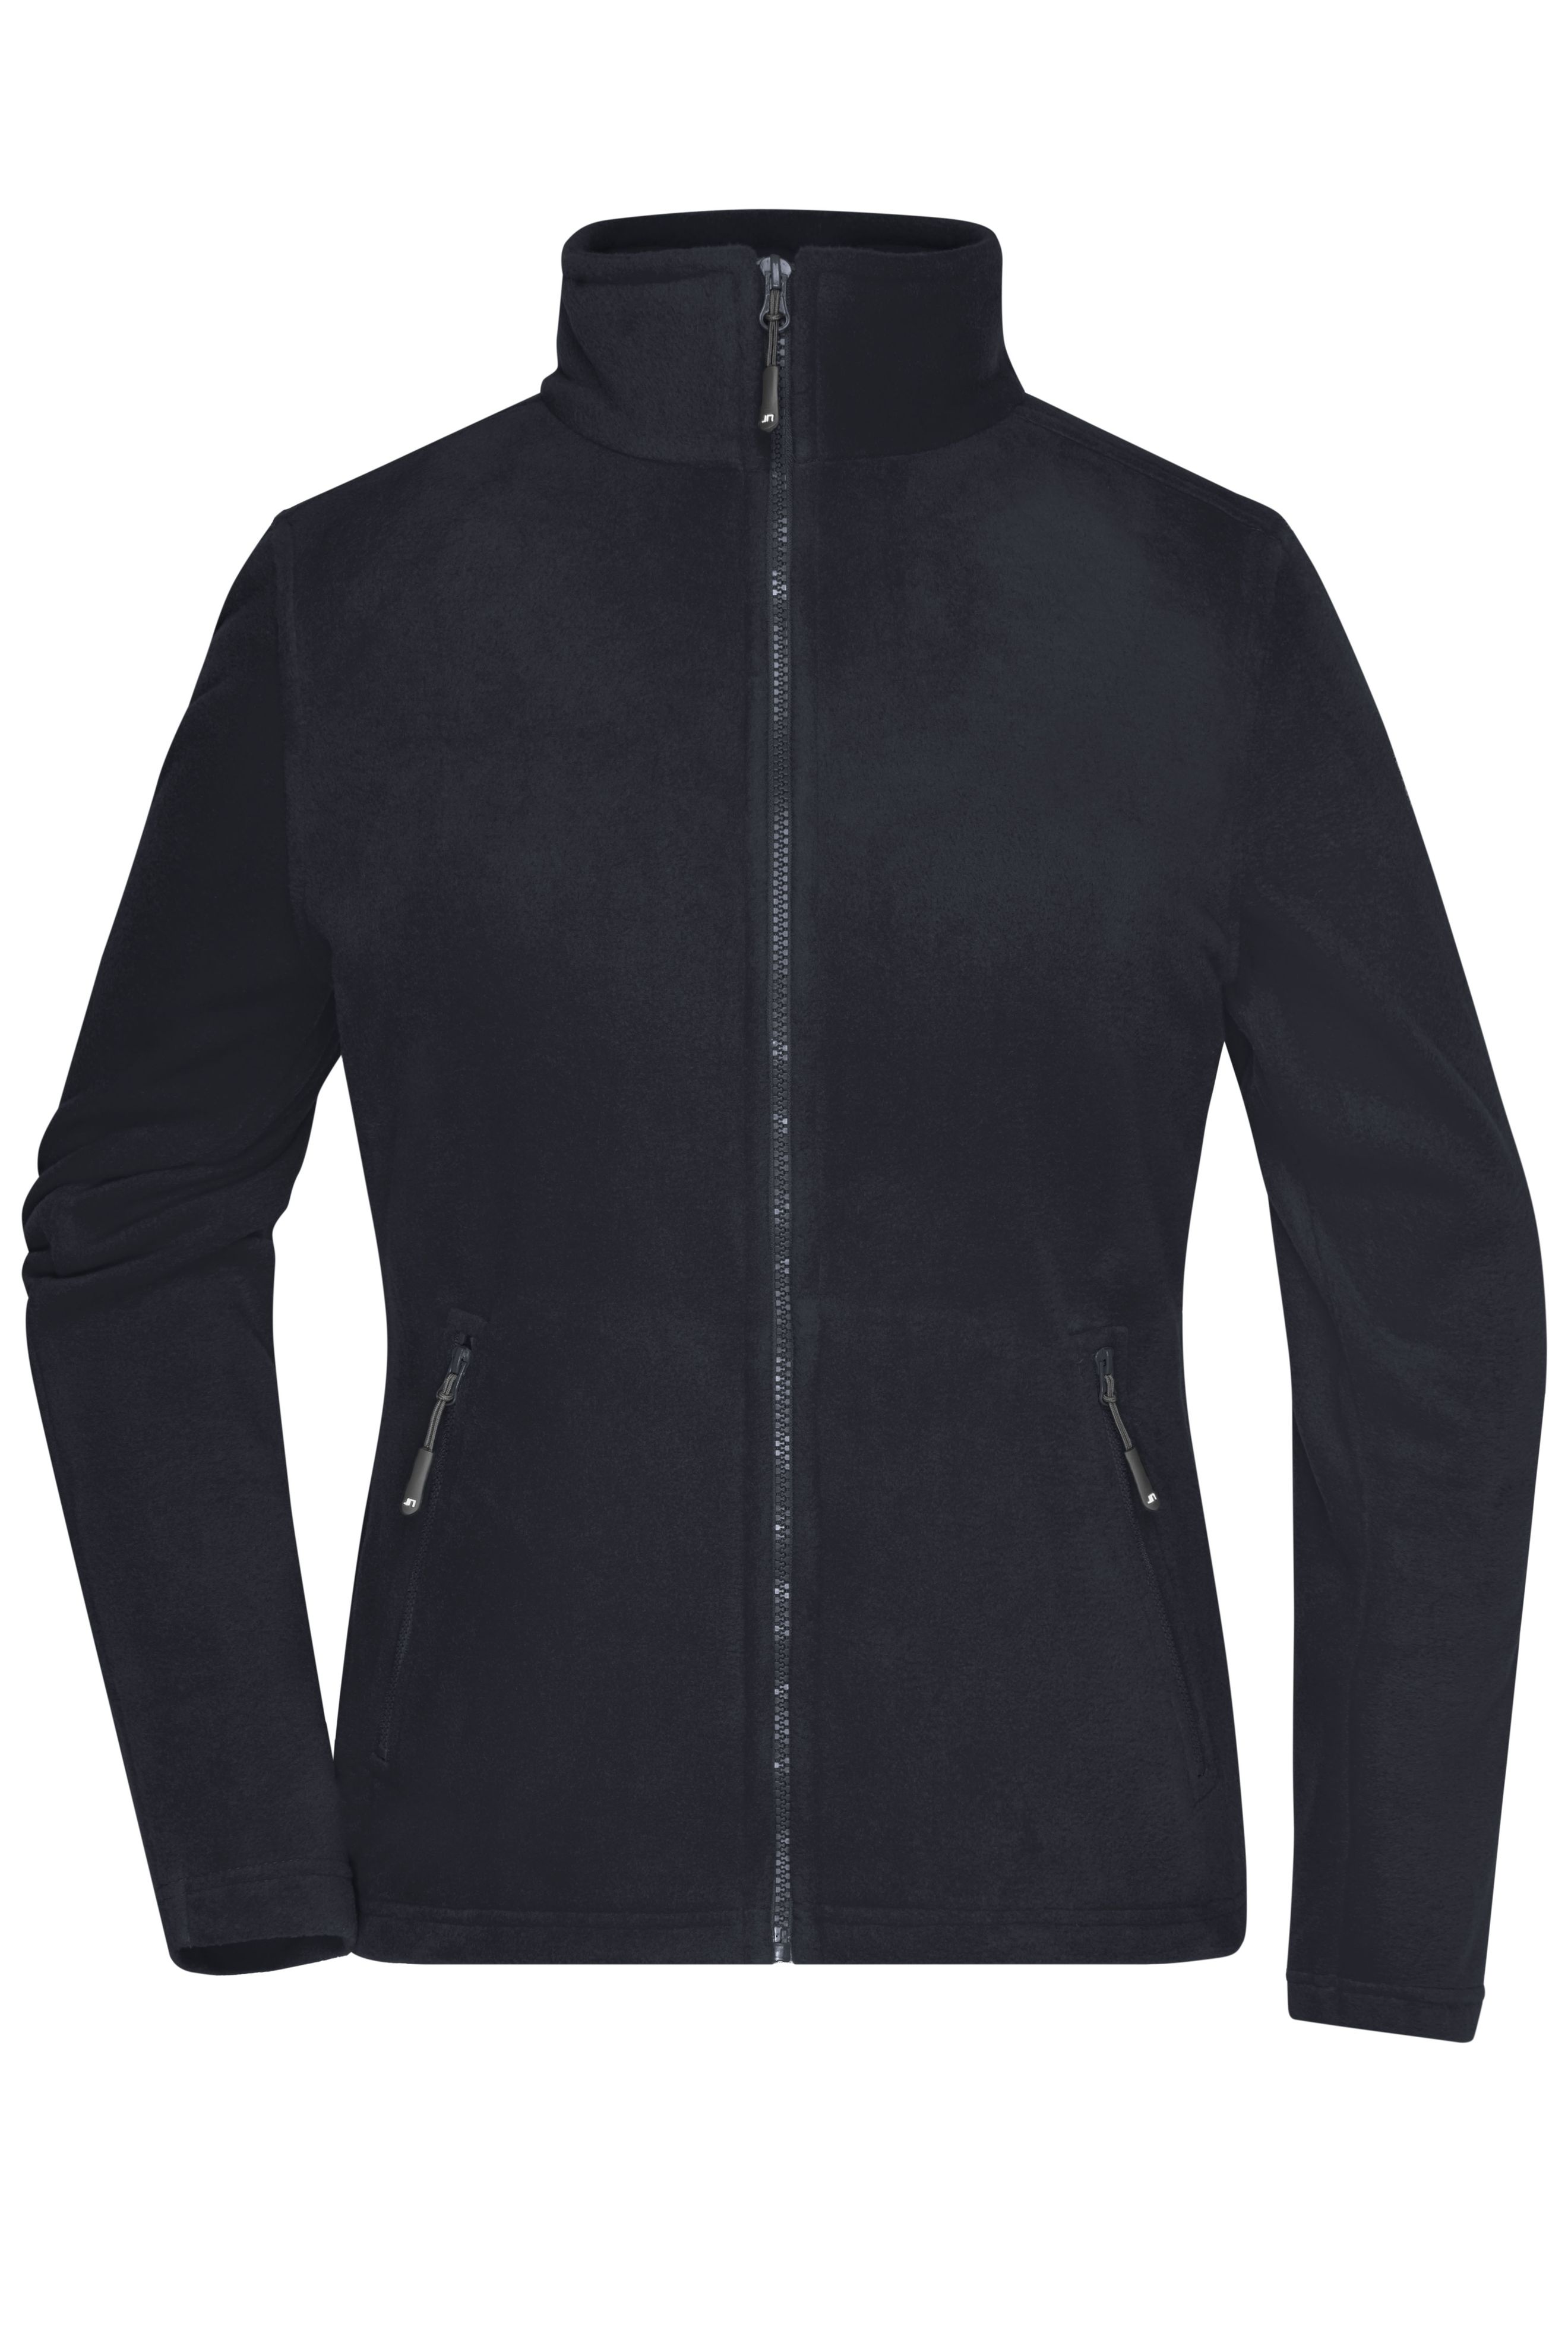 Ladies Ladies' Fleece Jacket Navy-Daiber